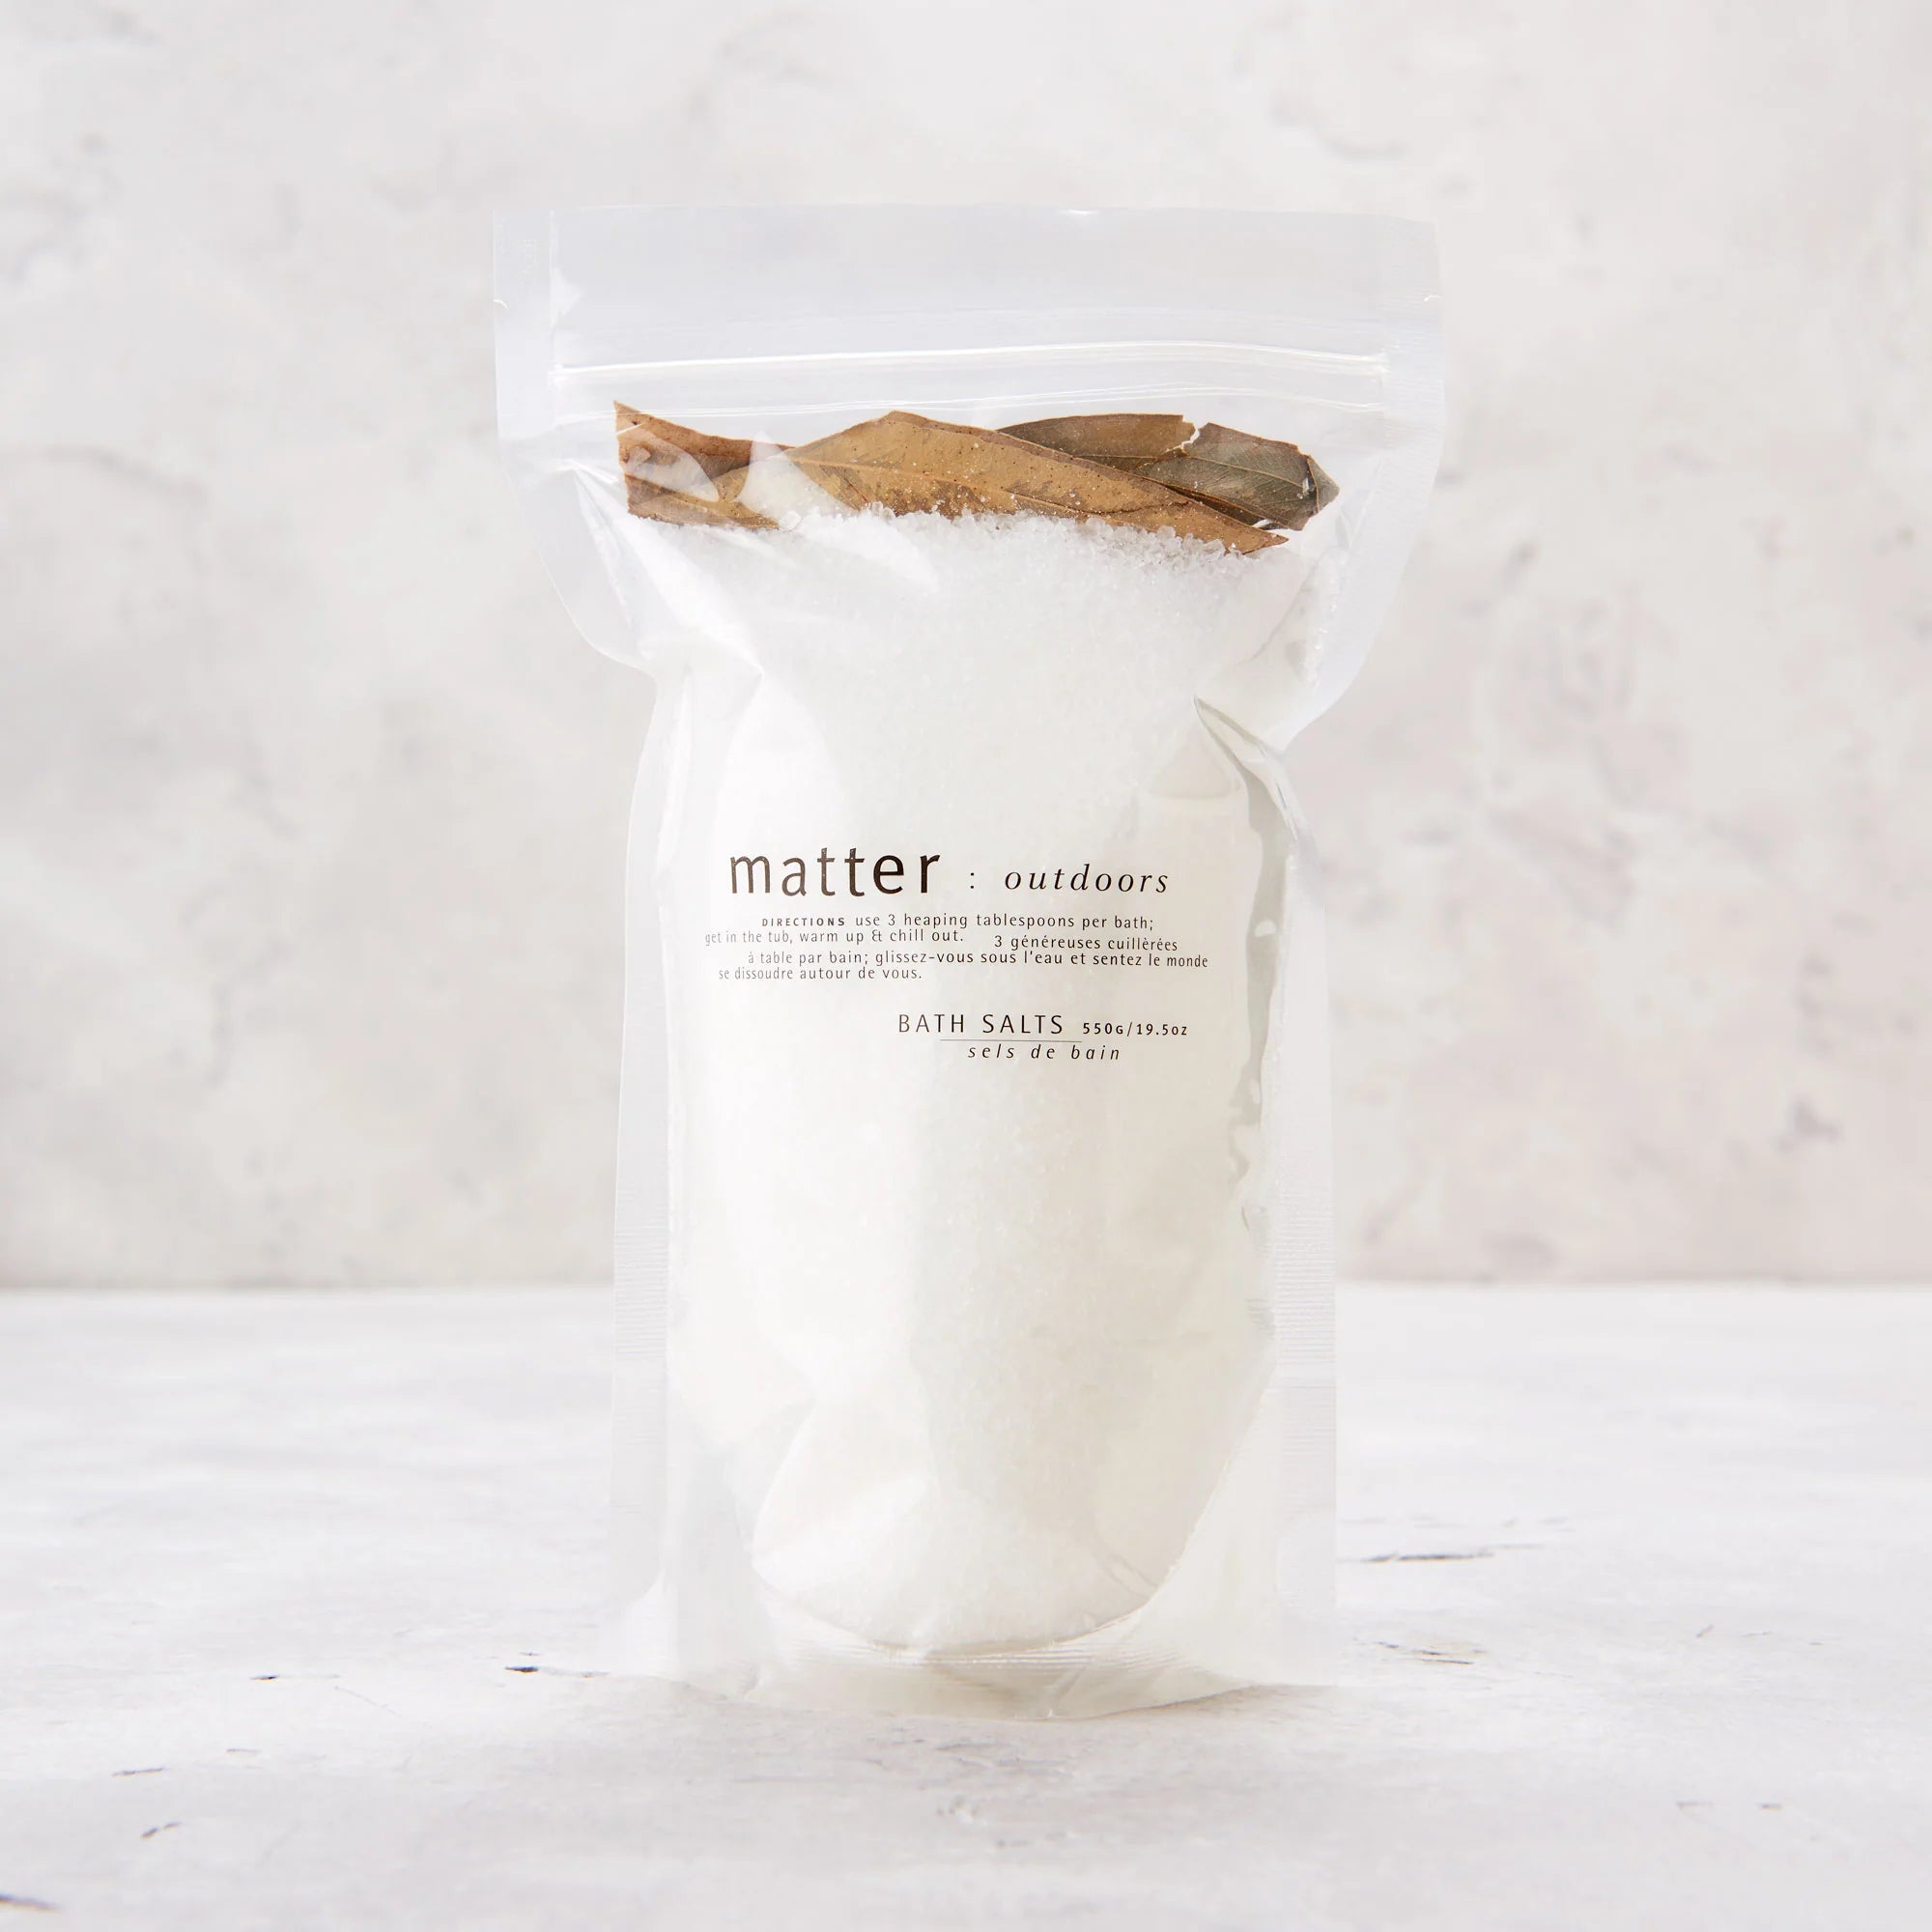 Matter Company - Outdoors Bath Salts